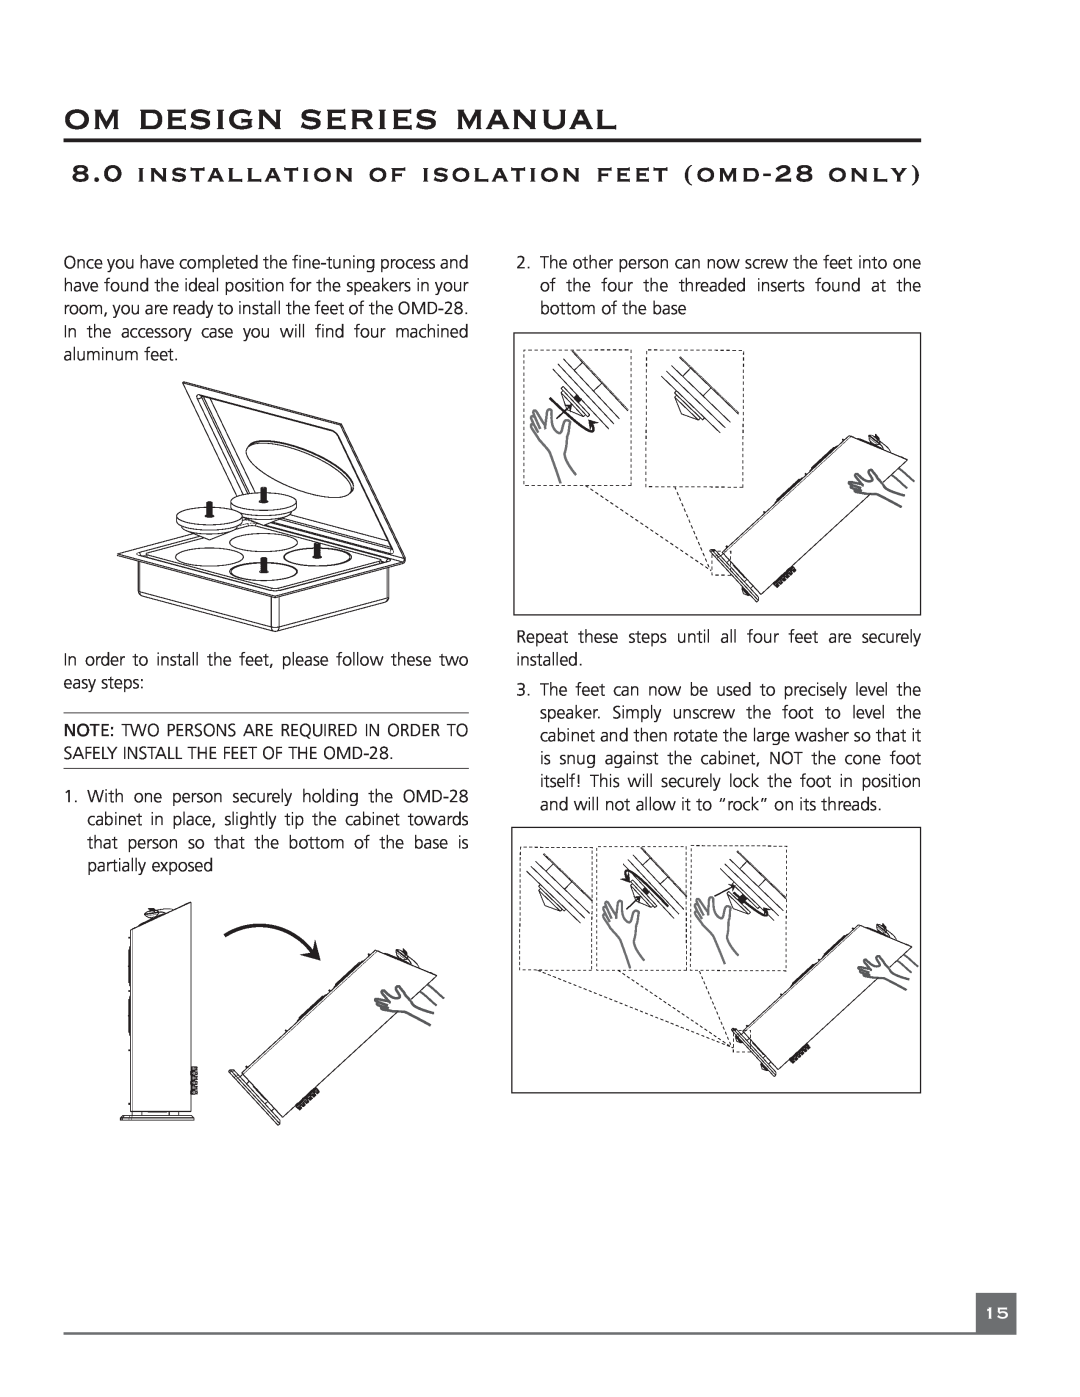 Mirage Loudspeakers OM DESIGN SERIES installation of isolation feet omd-28only, om design series manual 